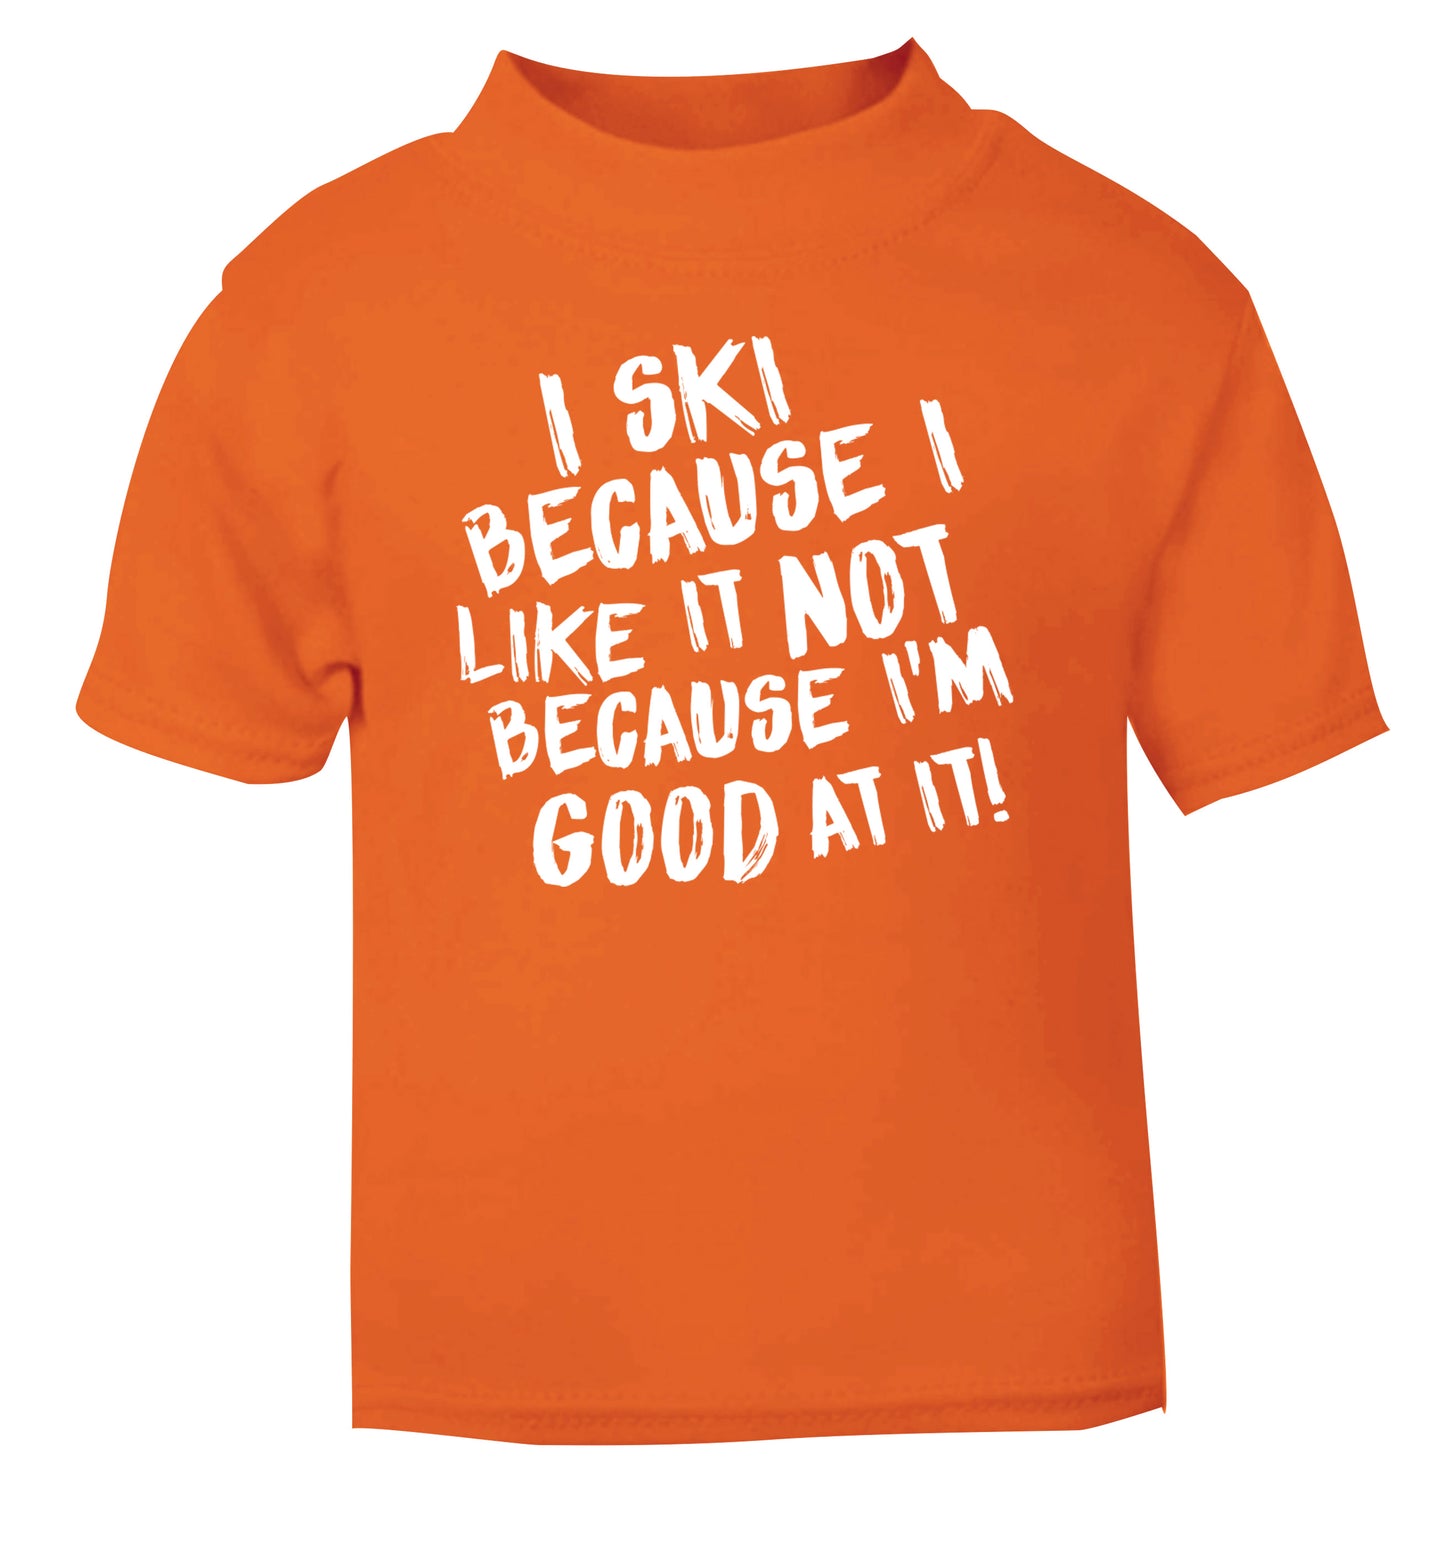 I ski because I like it not because I'm good at it orange Baby Toddler Tshirt 2 Years